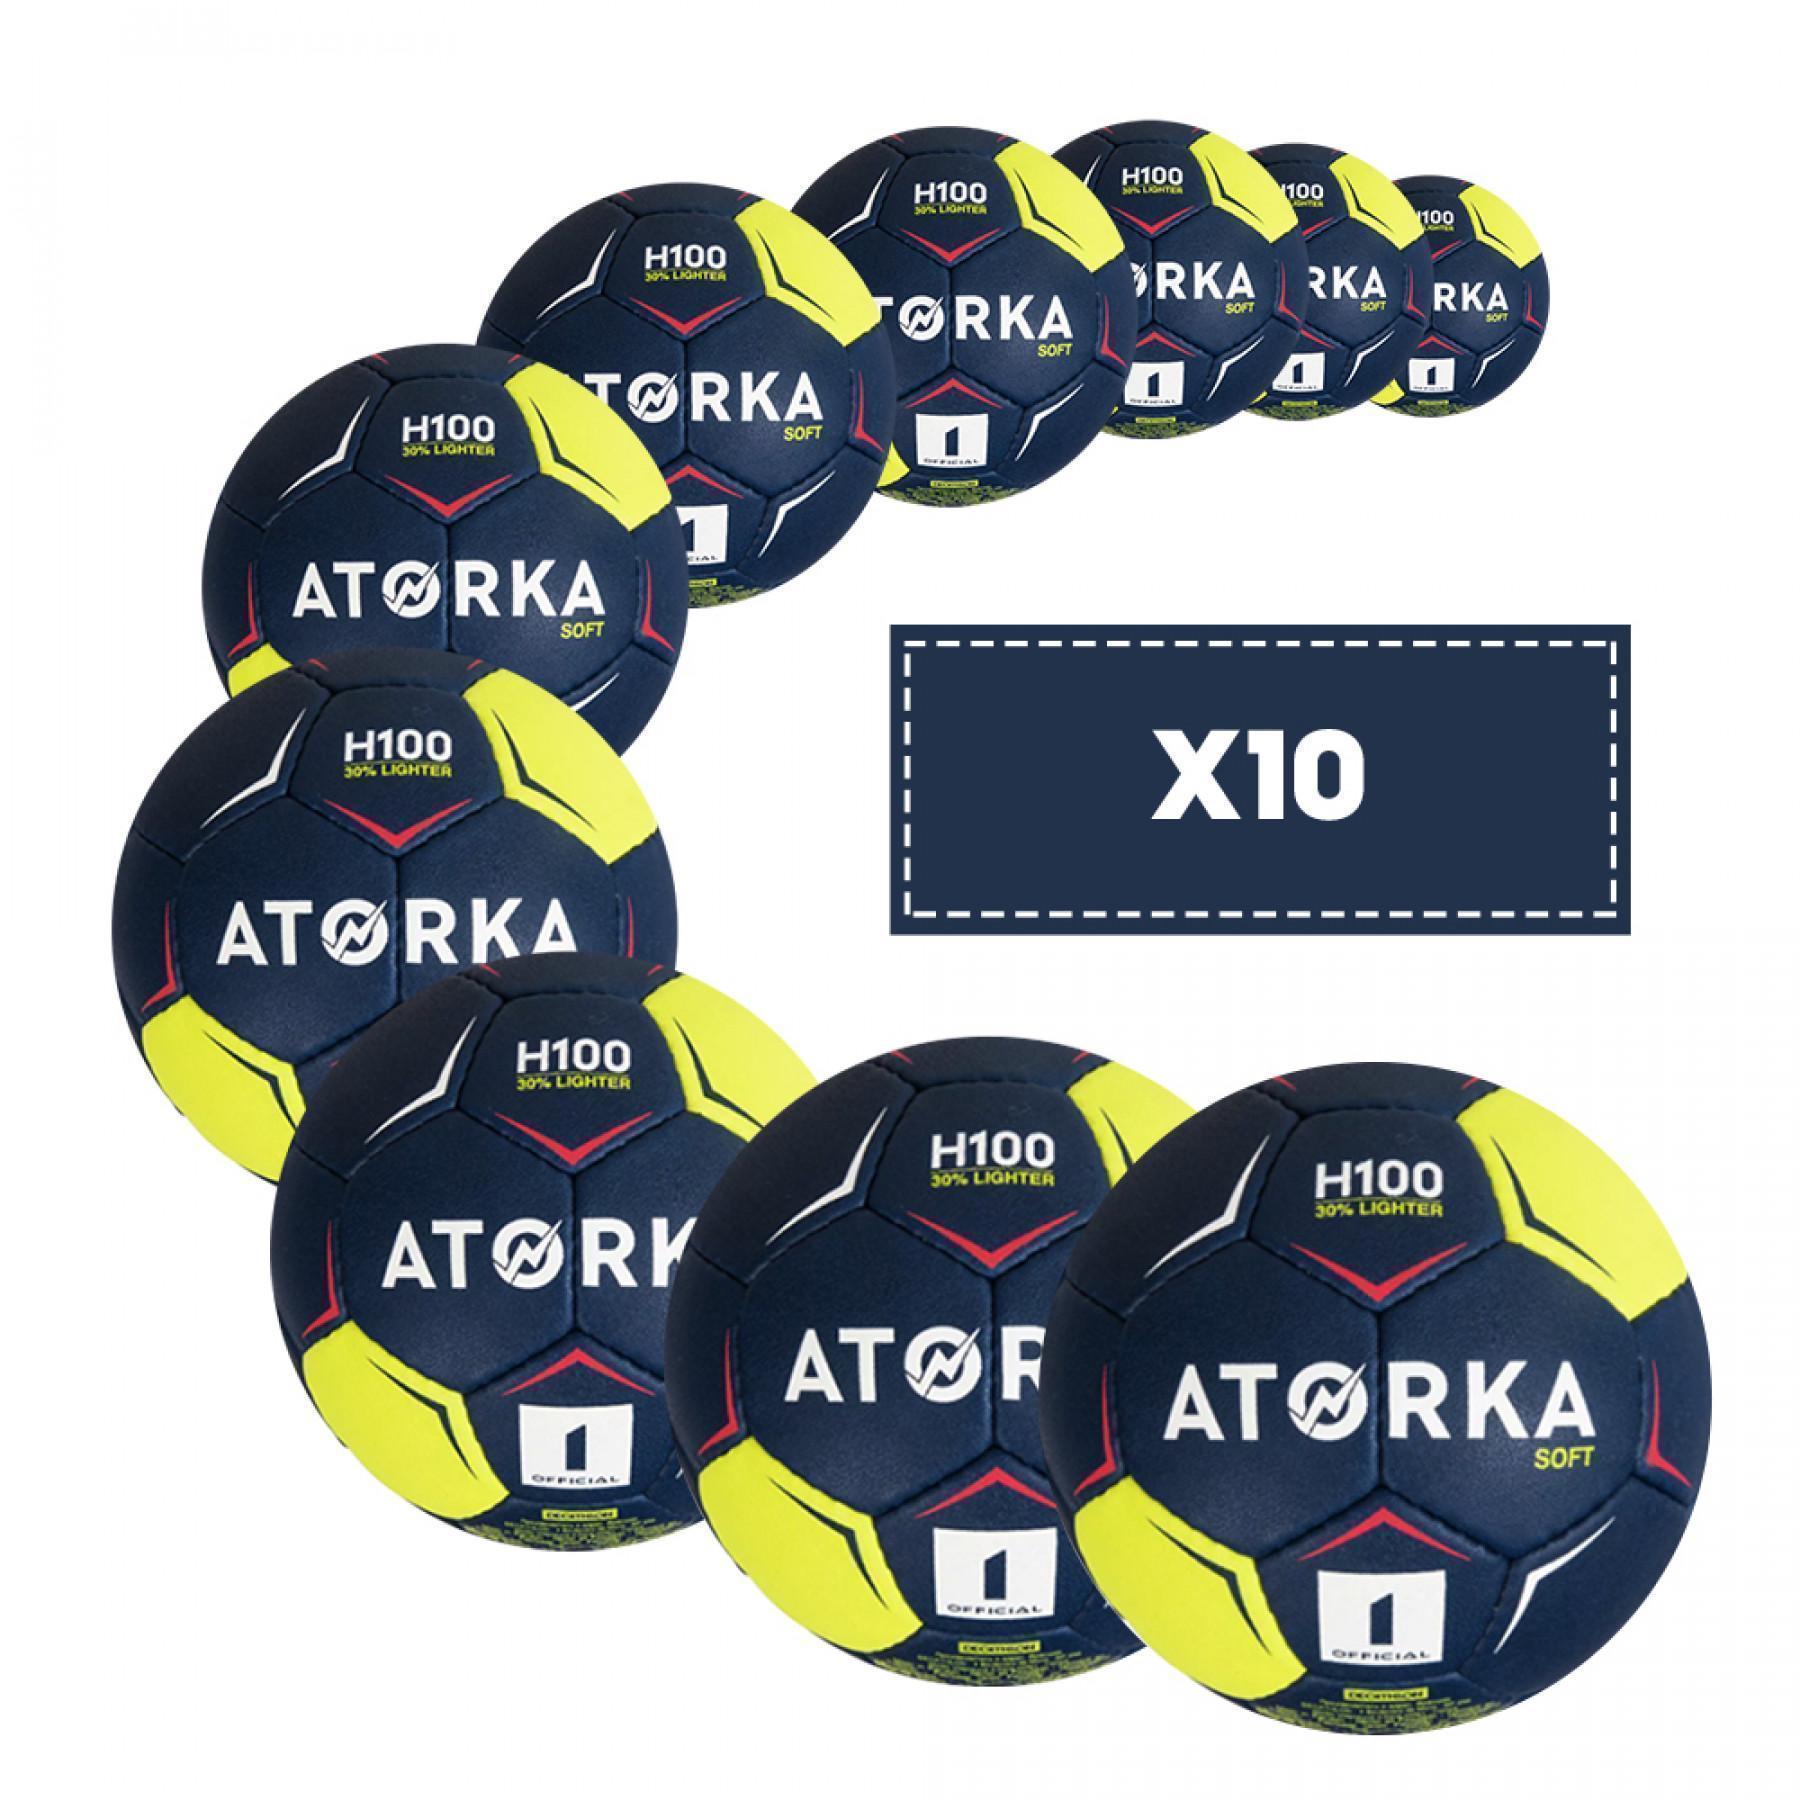 Paquete de 10 globos para niños Atorka H100 Soft - Taille 1